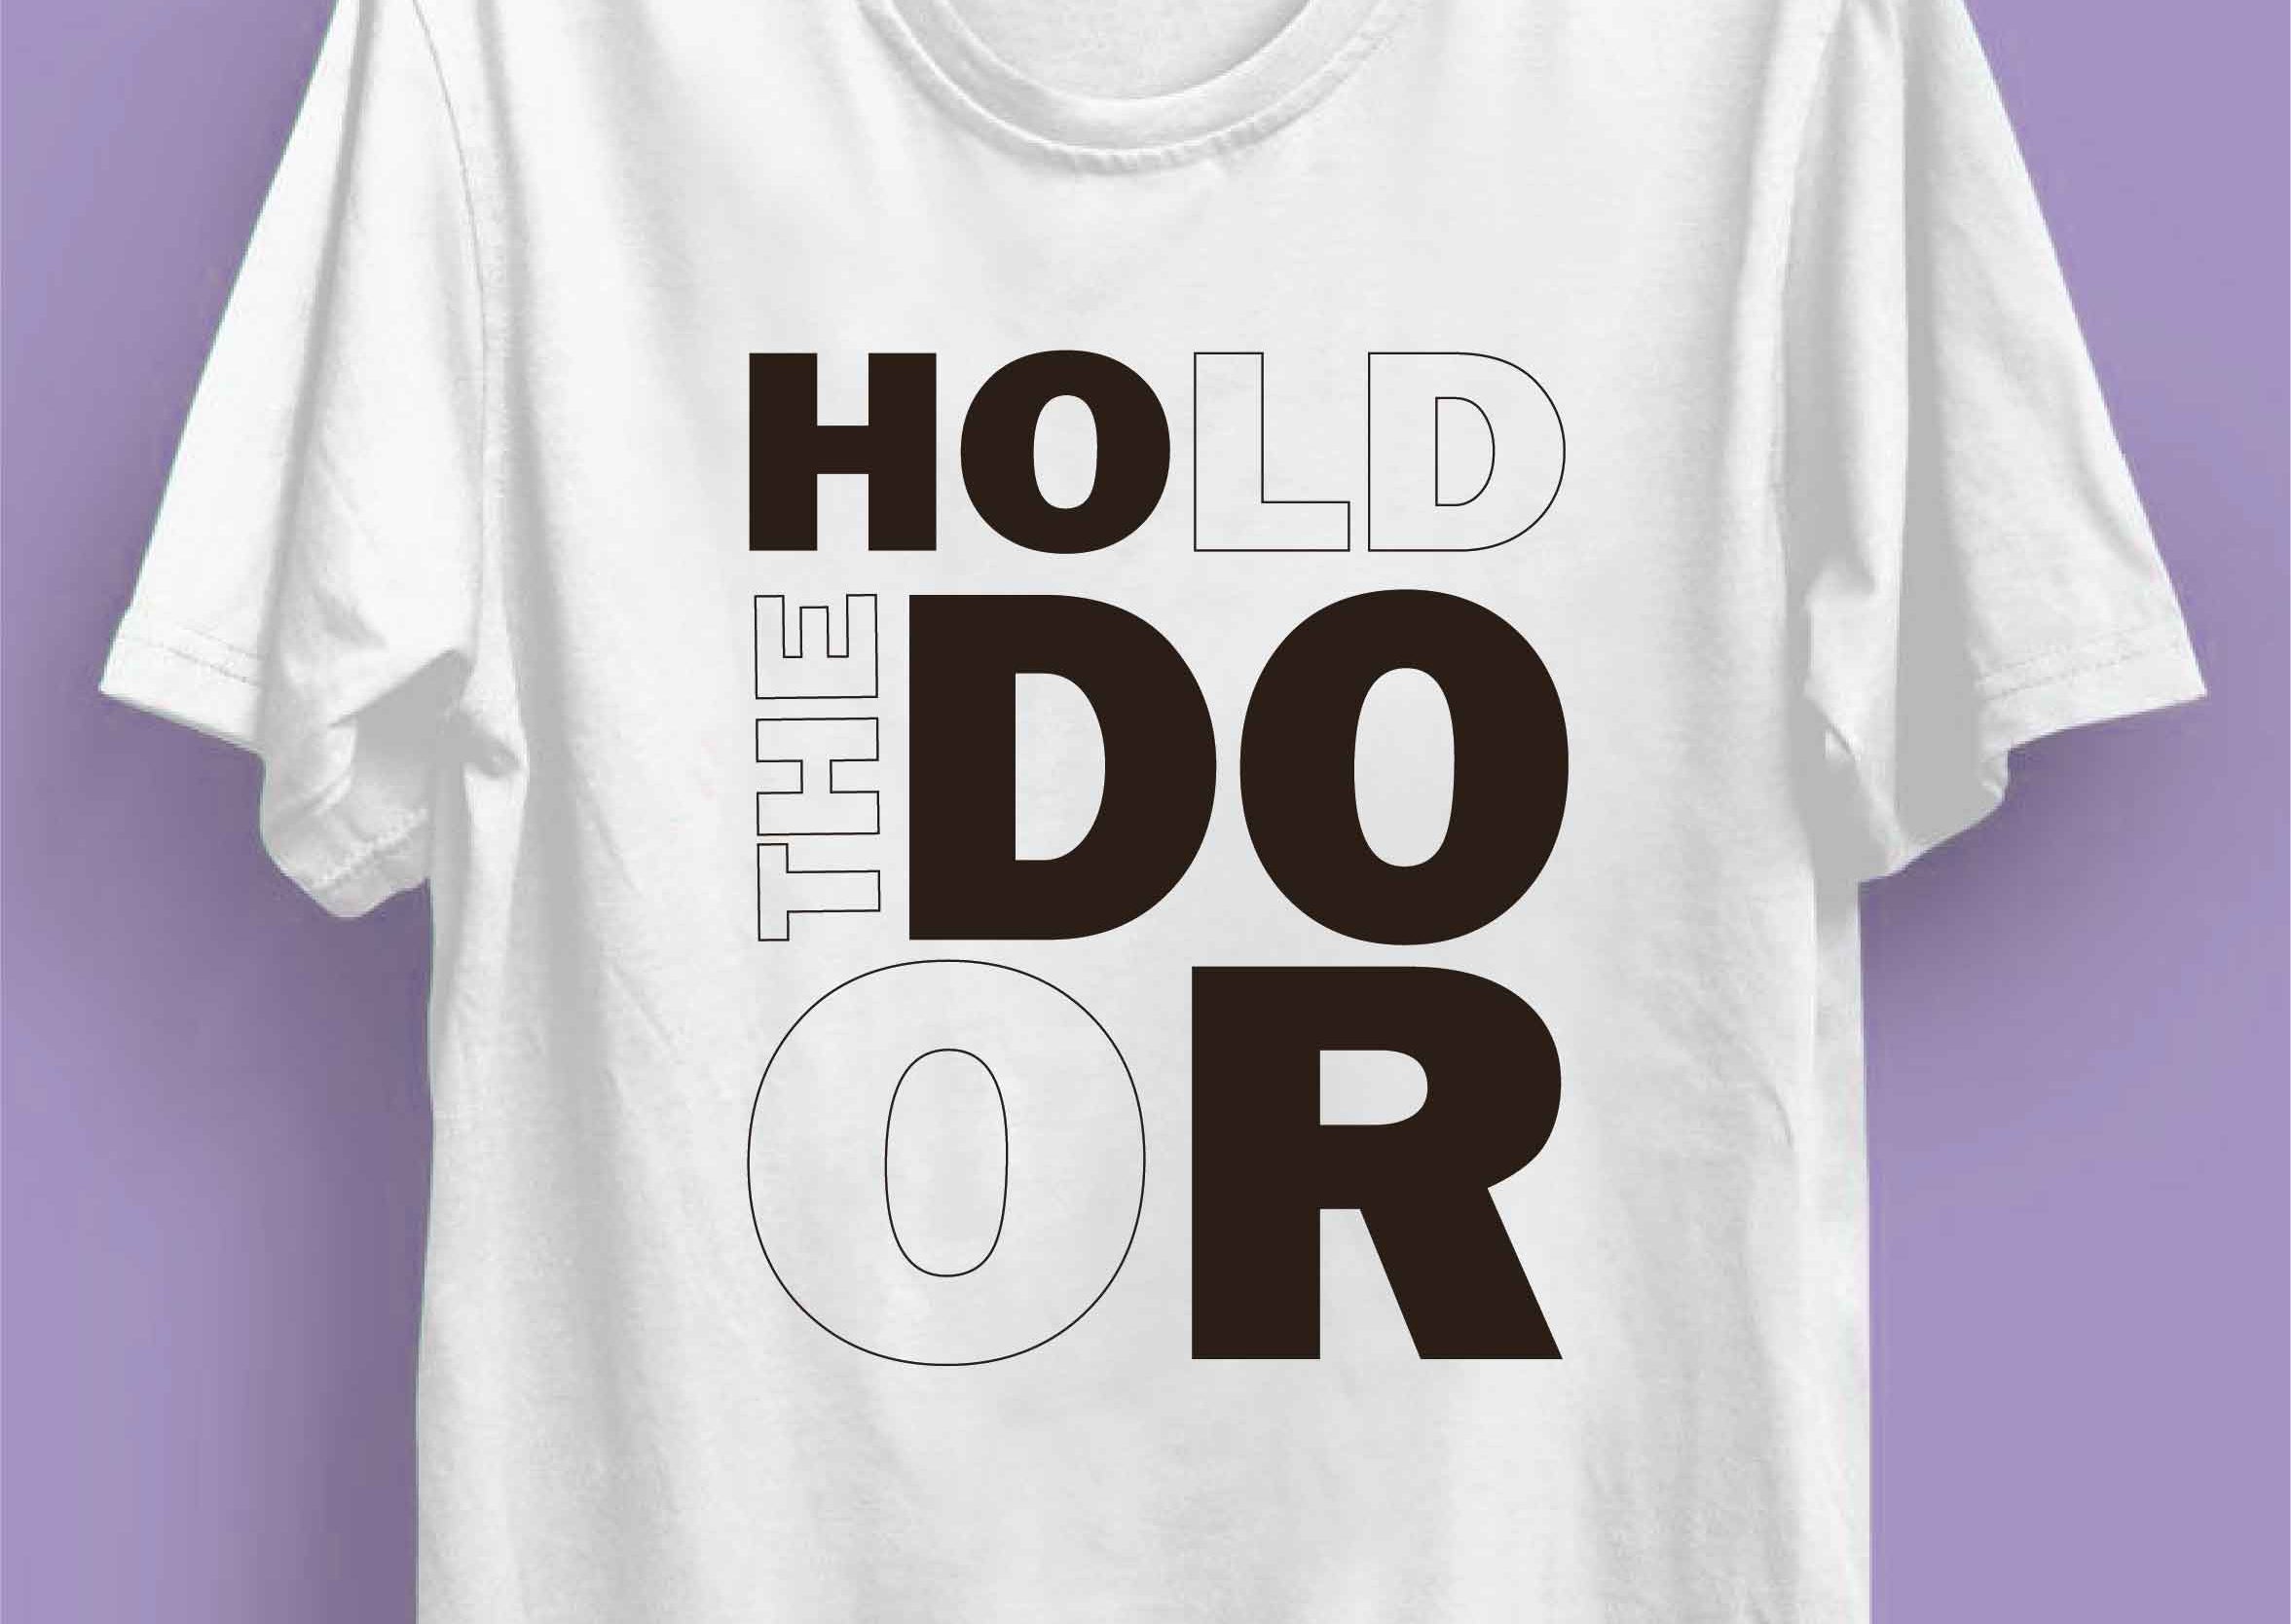 Hodor Reactr Tshirts For Men - Eyewearlabs